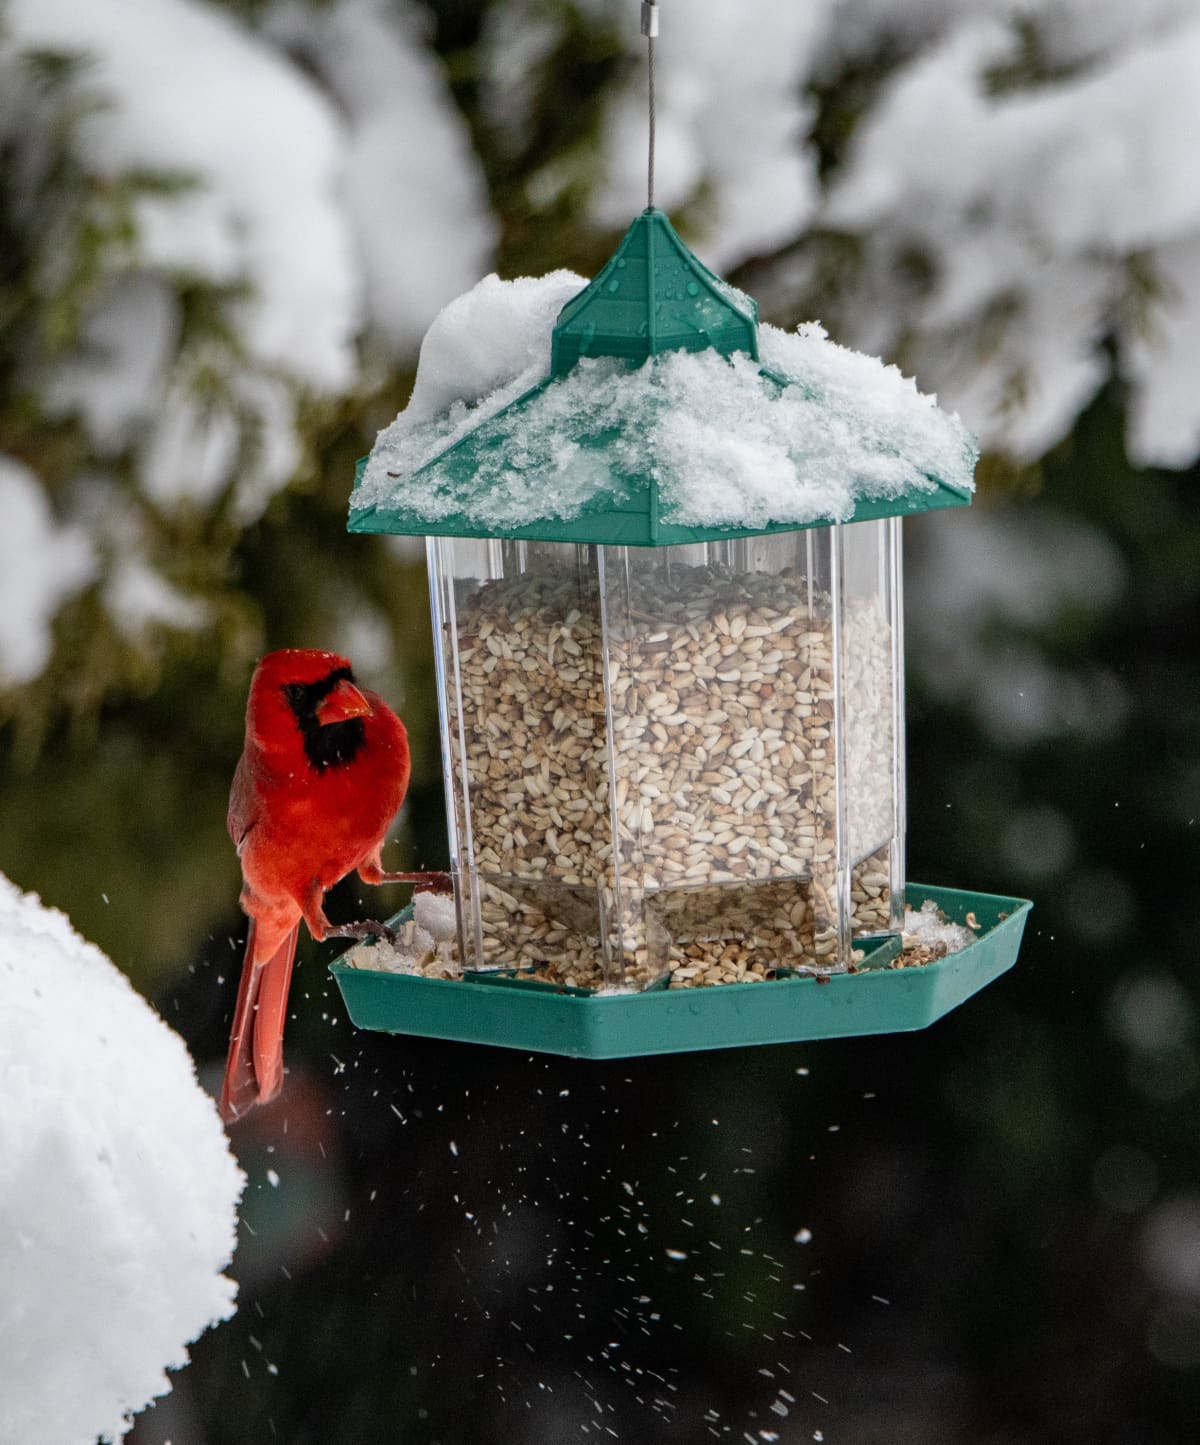 A cute cardinal eating seed from a bird feeder